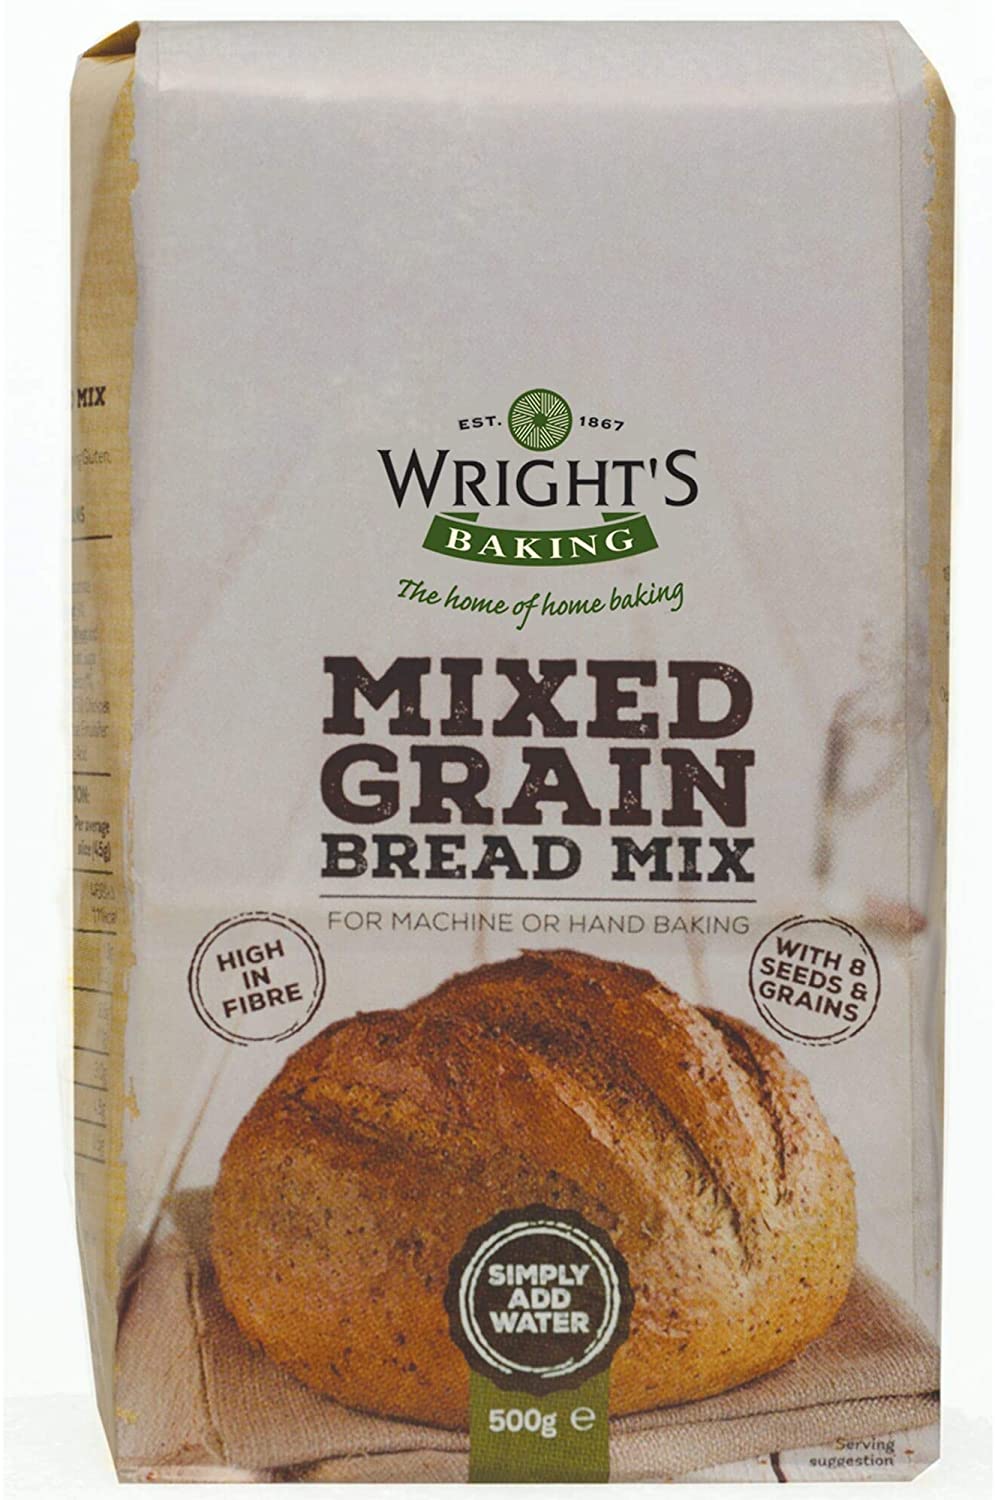 Wrights Baking Mixed Grain Bread Mix